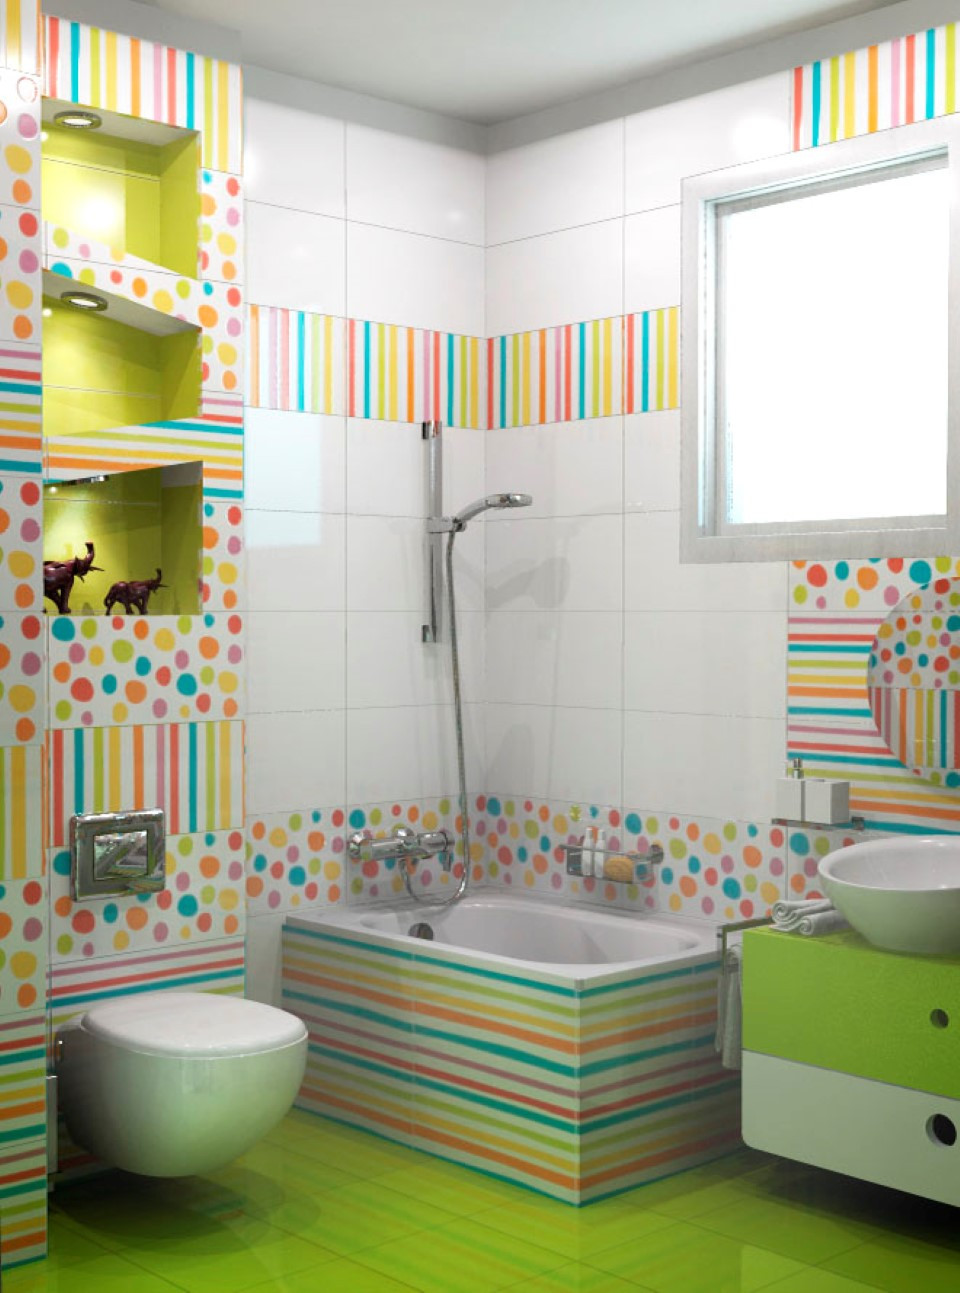 Bathroom Sets For Kids
 Unique Kids Bathroom Decor Ideas Amaza Design